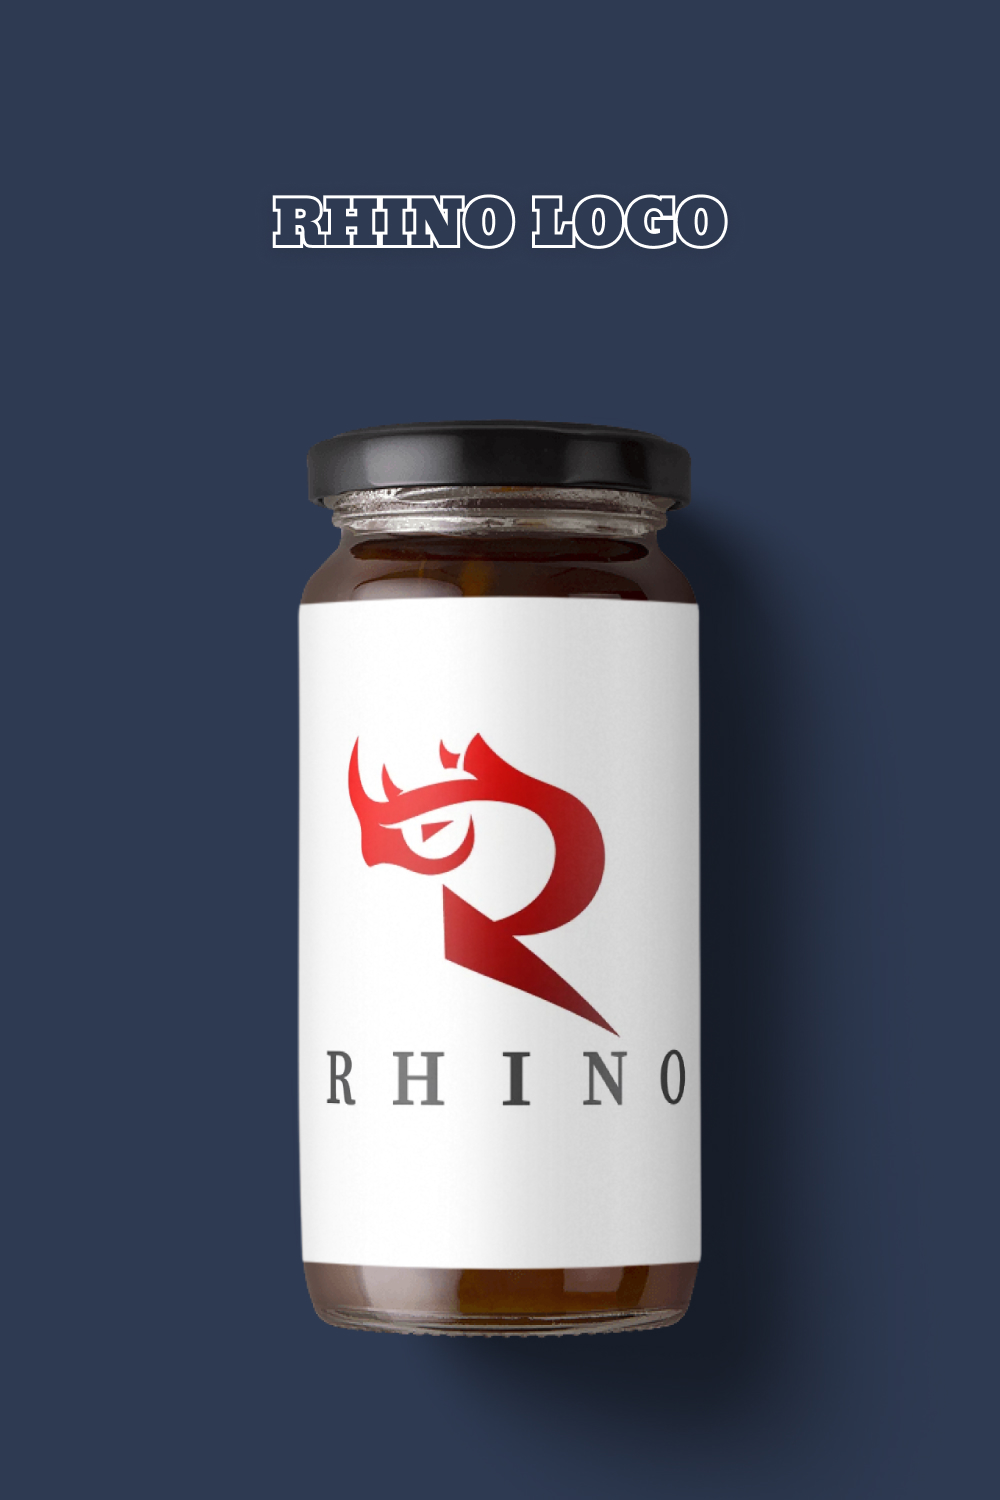 rhino logo 2 1 117